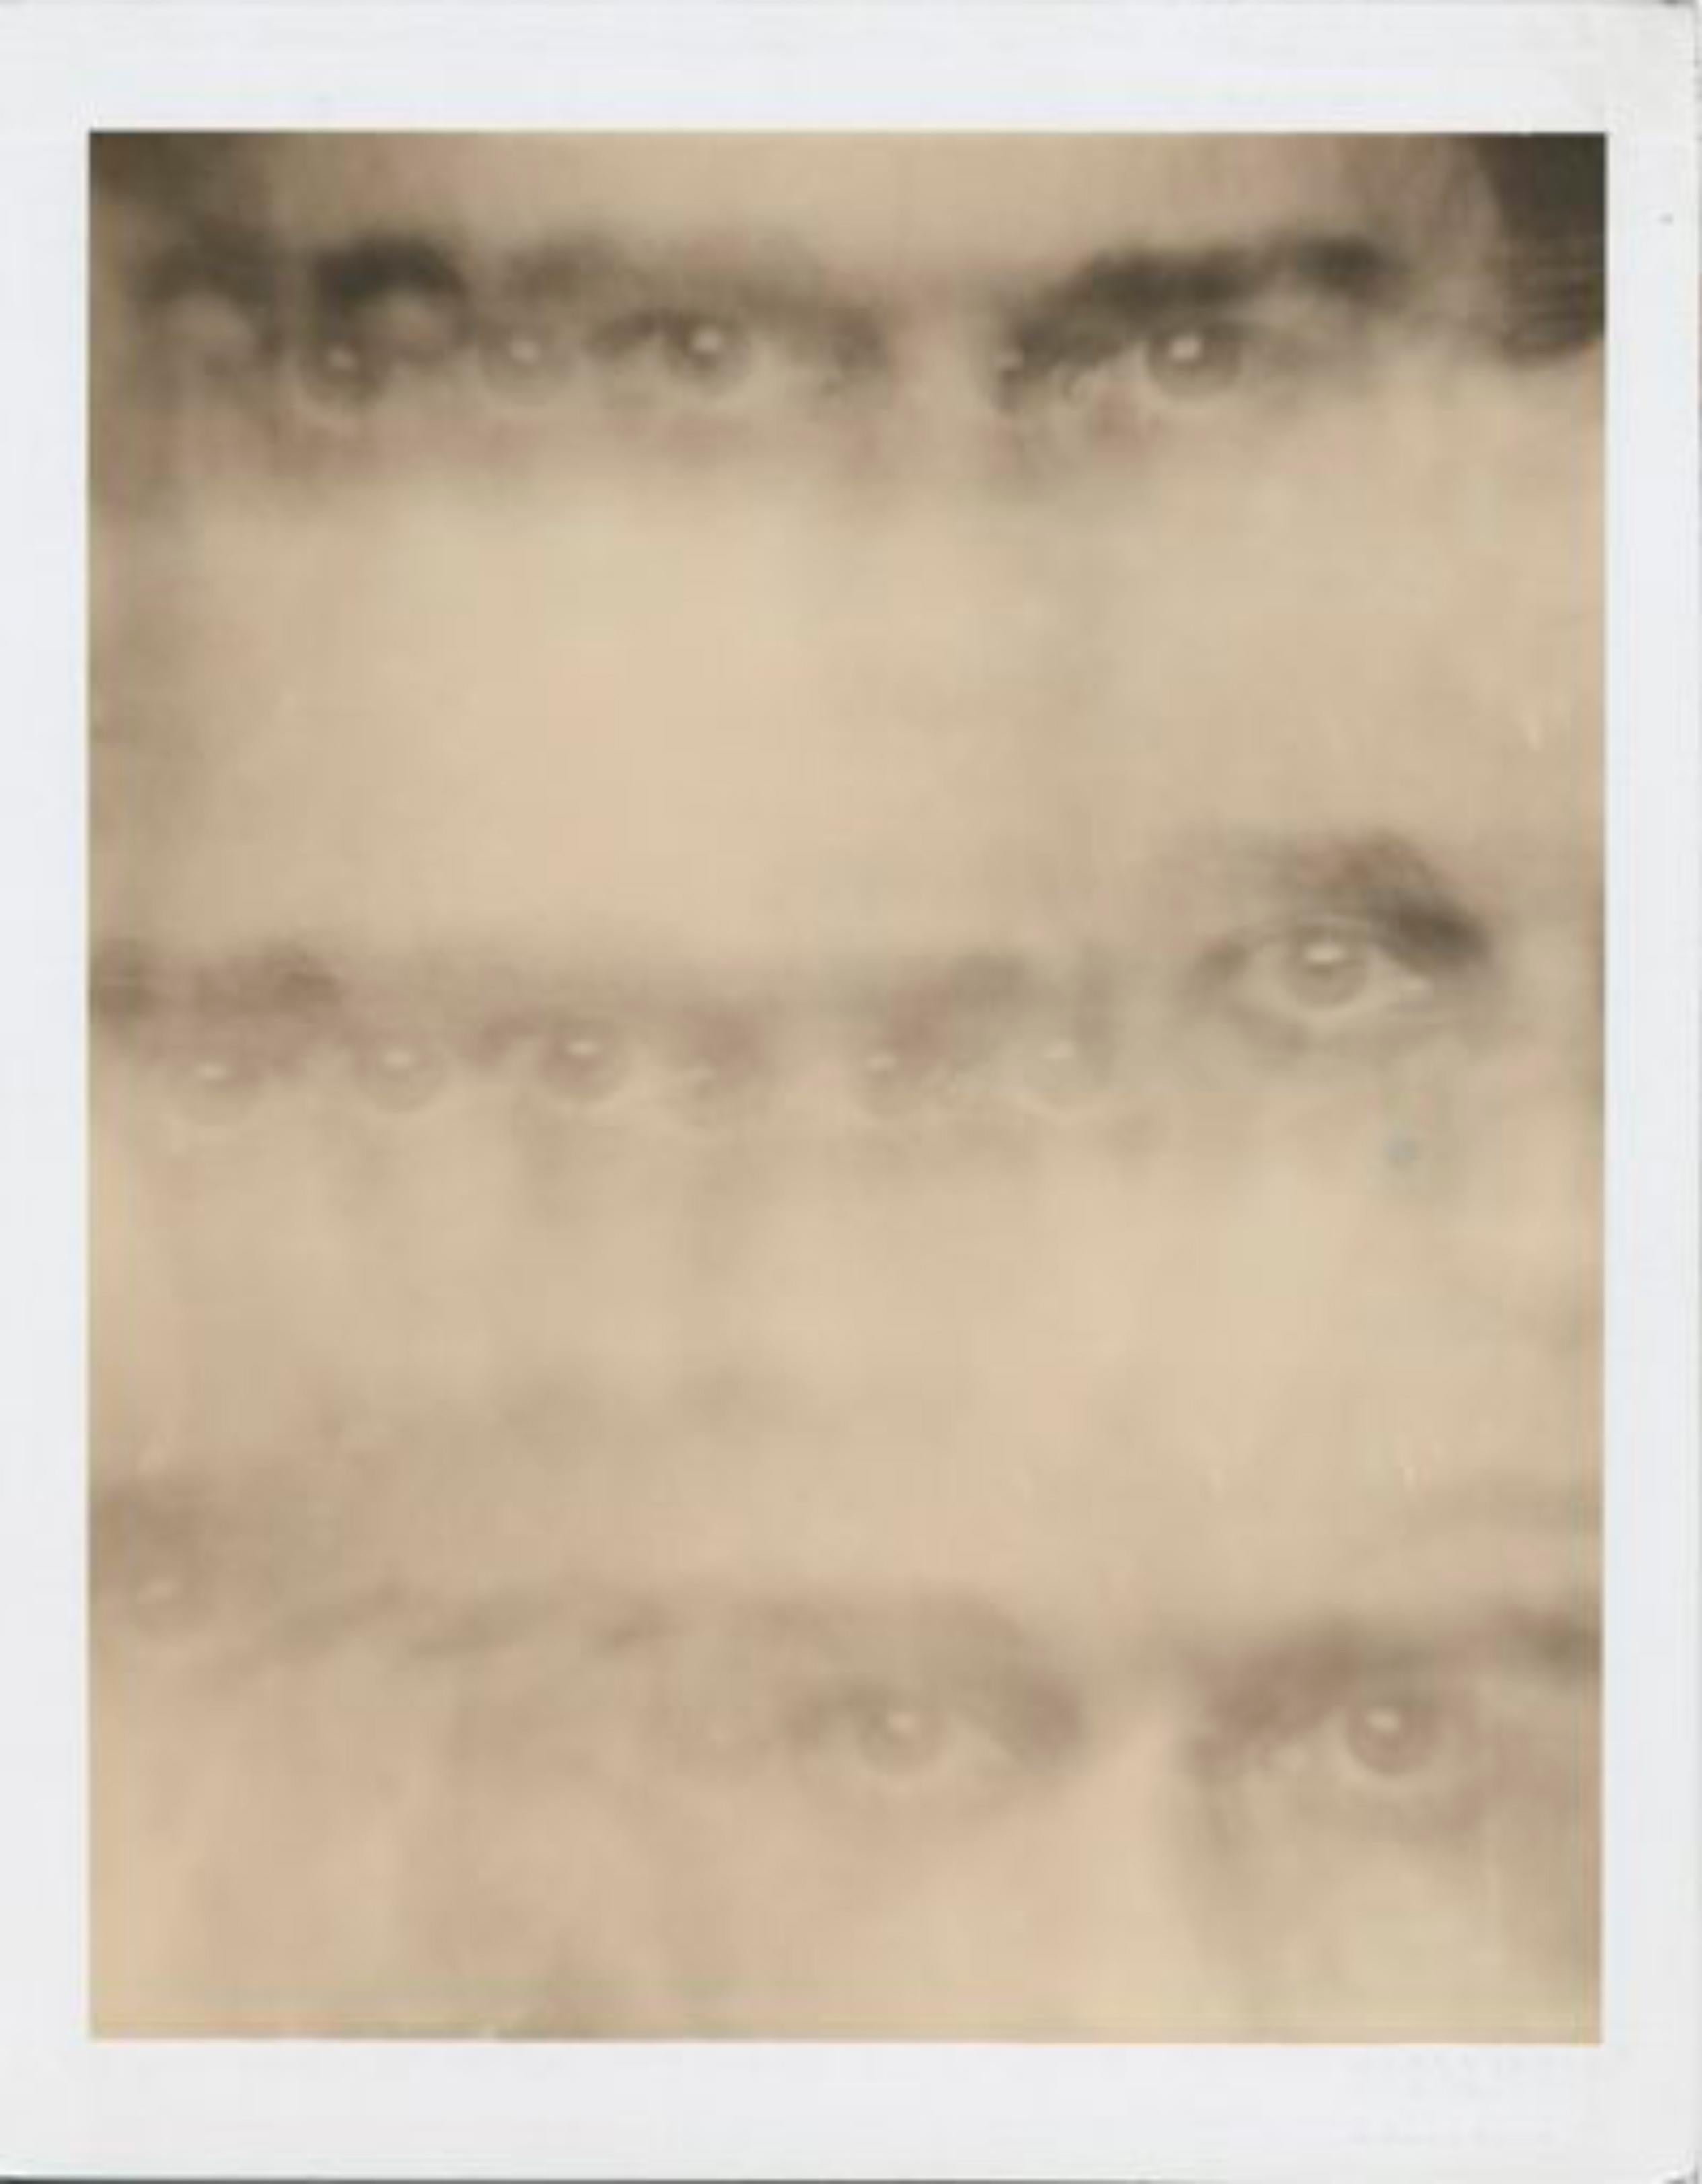 Jose Picayo Abstract Photograph - "David", New York, NY, 1996